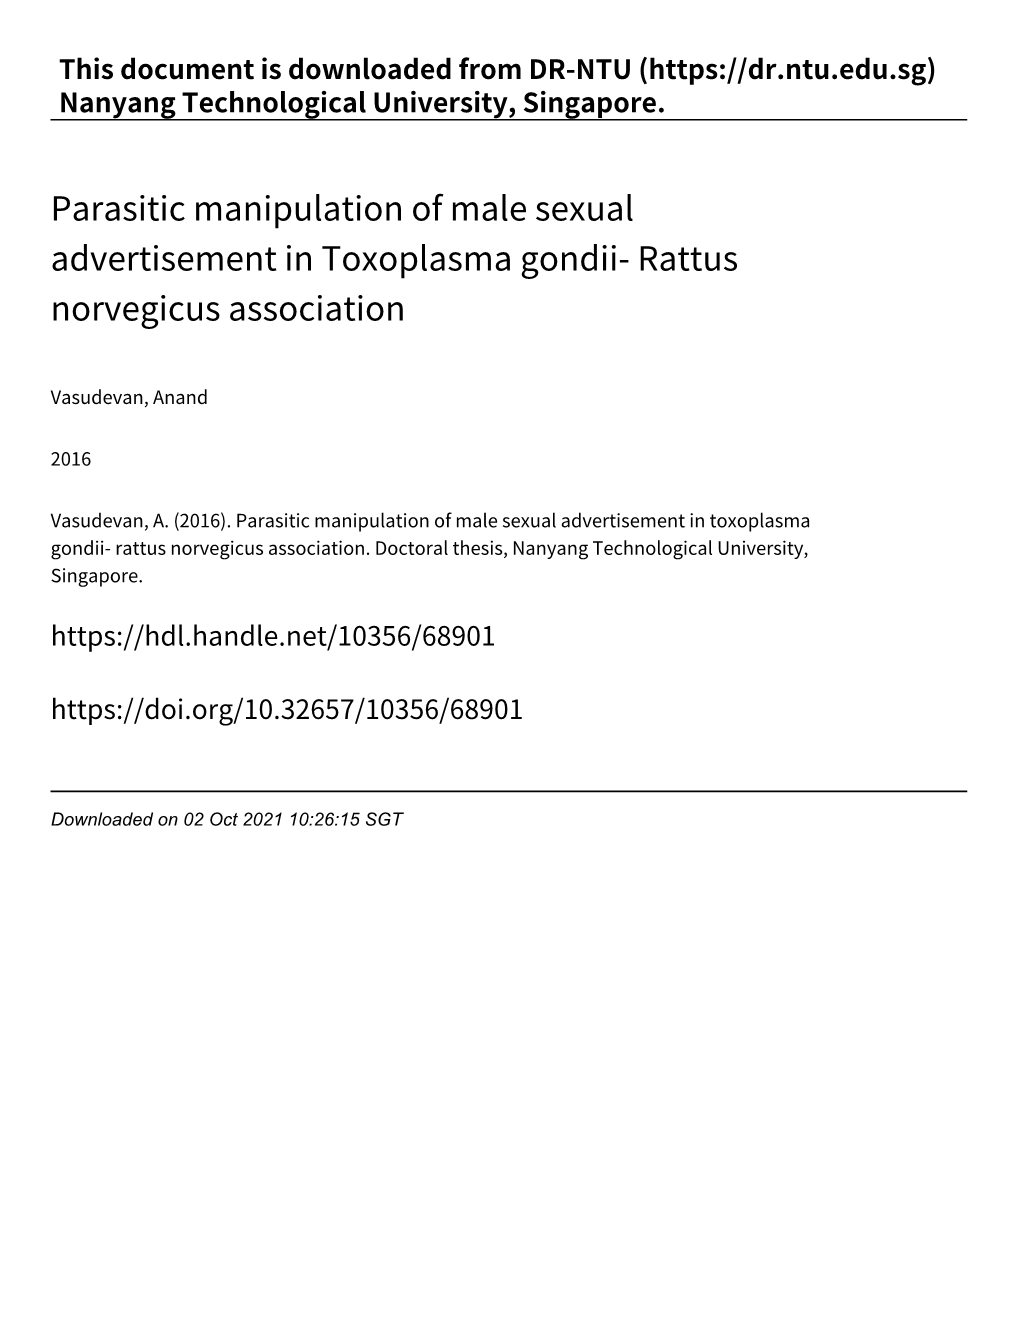 Parasitic Manipulation of Male Sexual Advertisement in Toxoplasma Gondii‑ Rattus Norvegicus Association